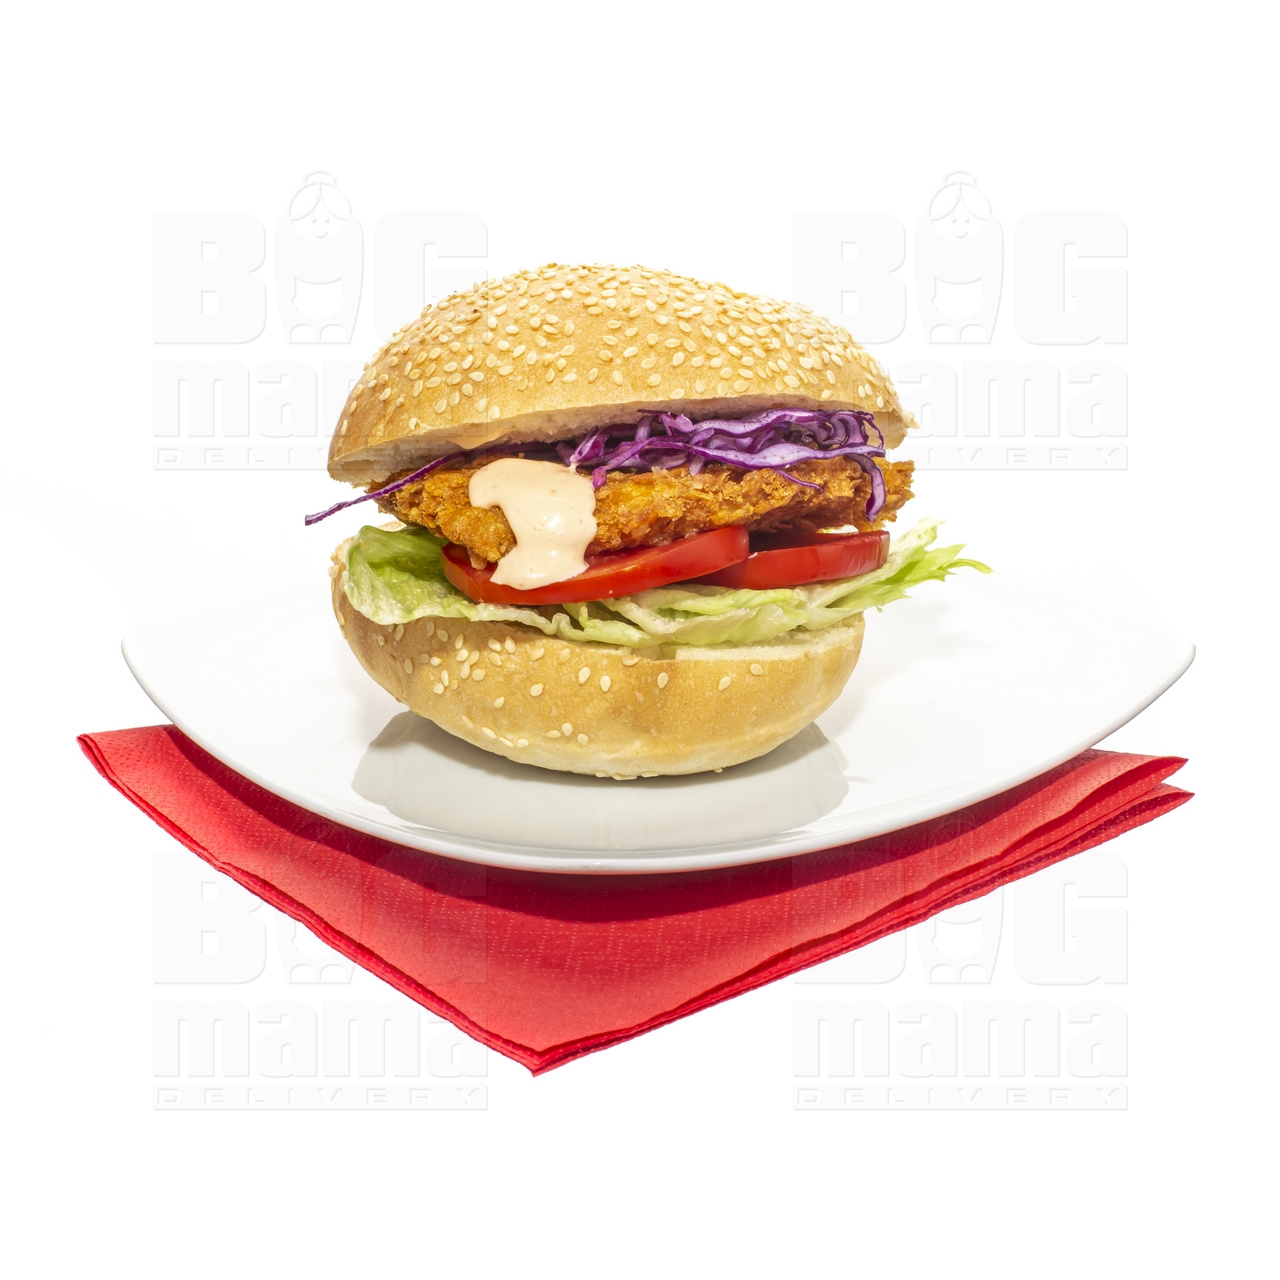 Product #215 image - Crispys nagy szendvics